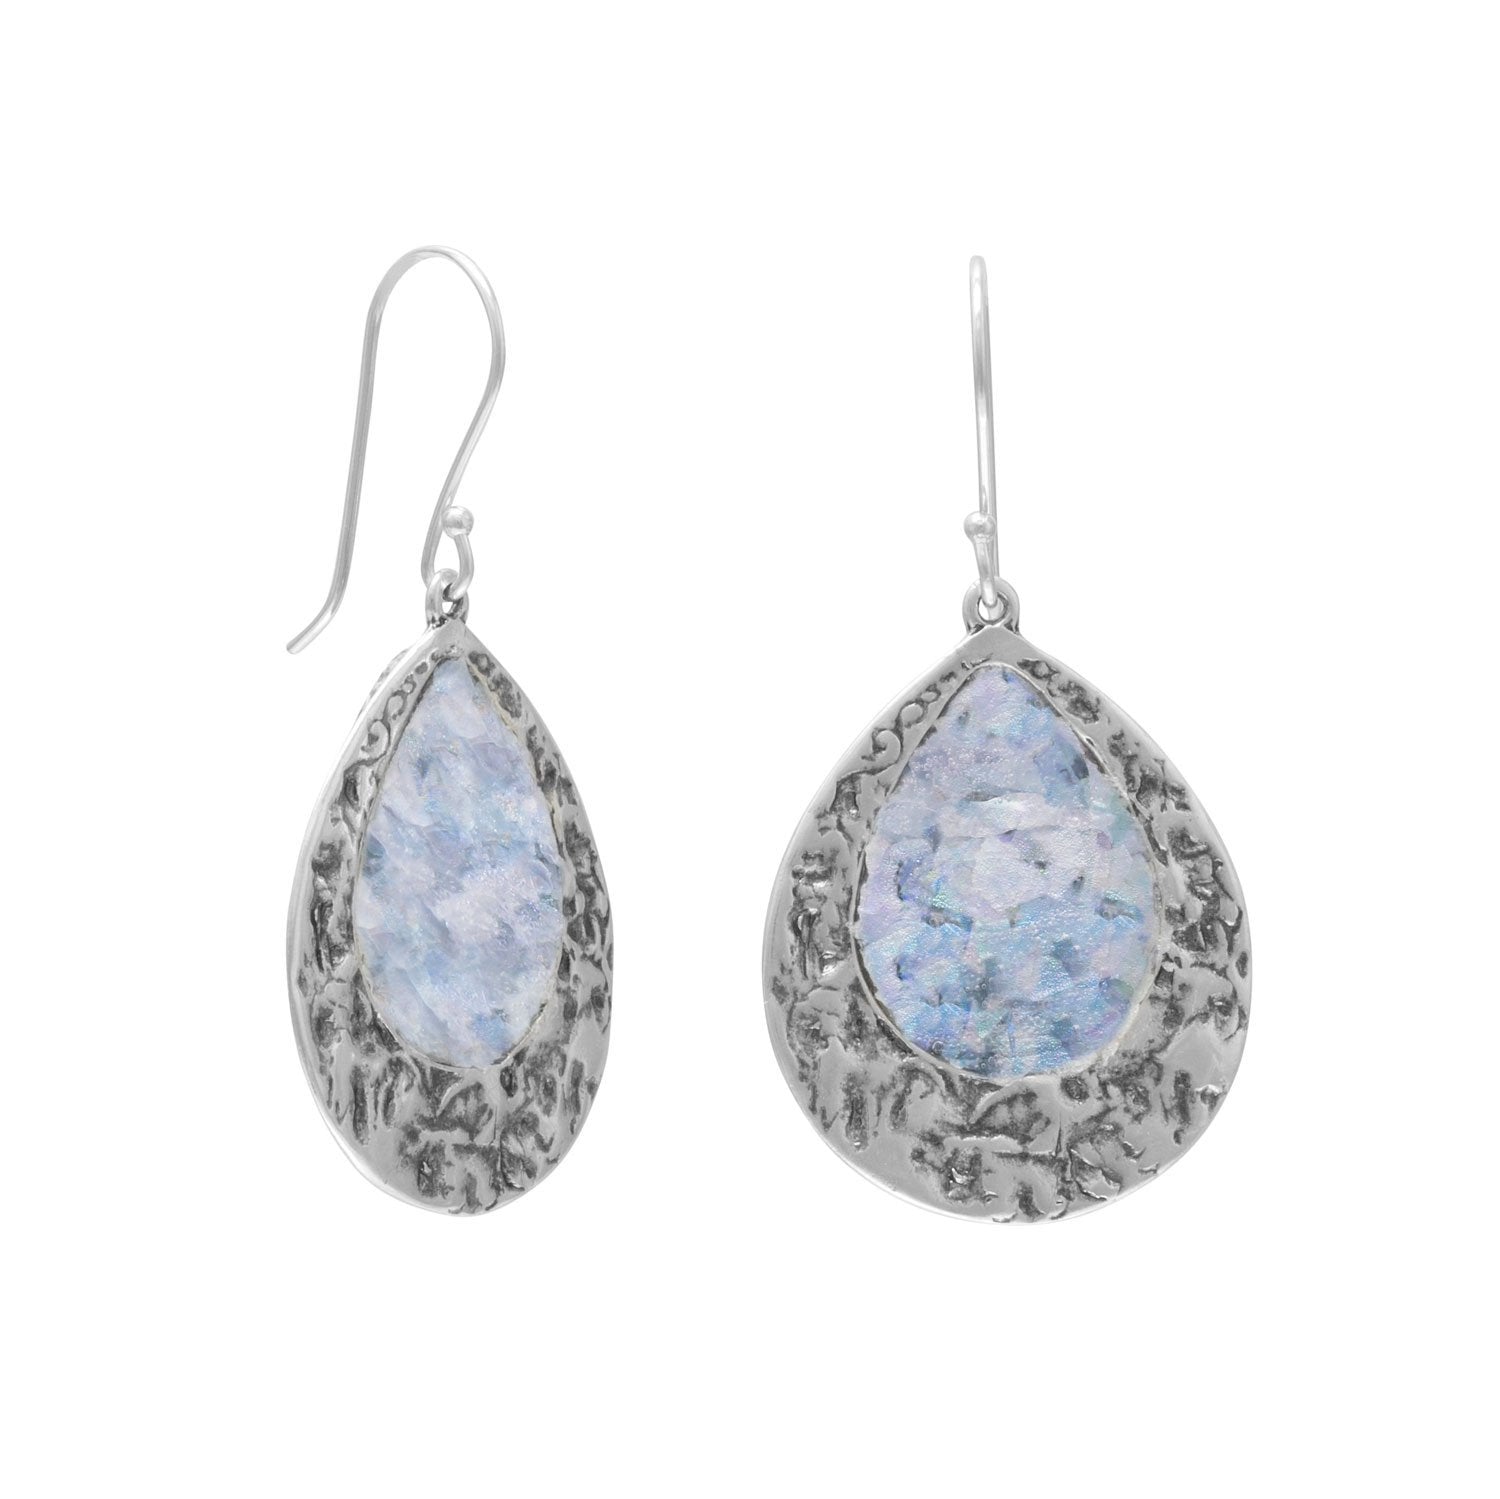 Oxidized Pear Shape Roman Glass Earrings - Joyeria Lady